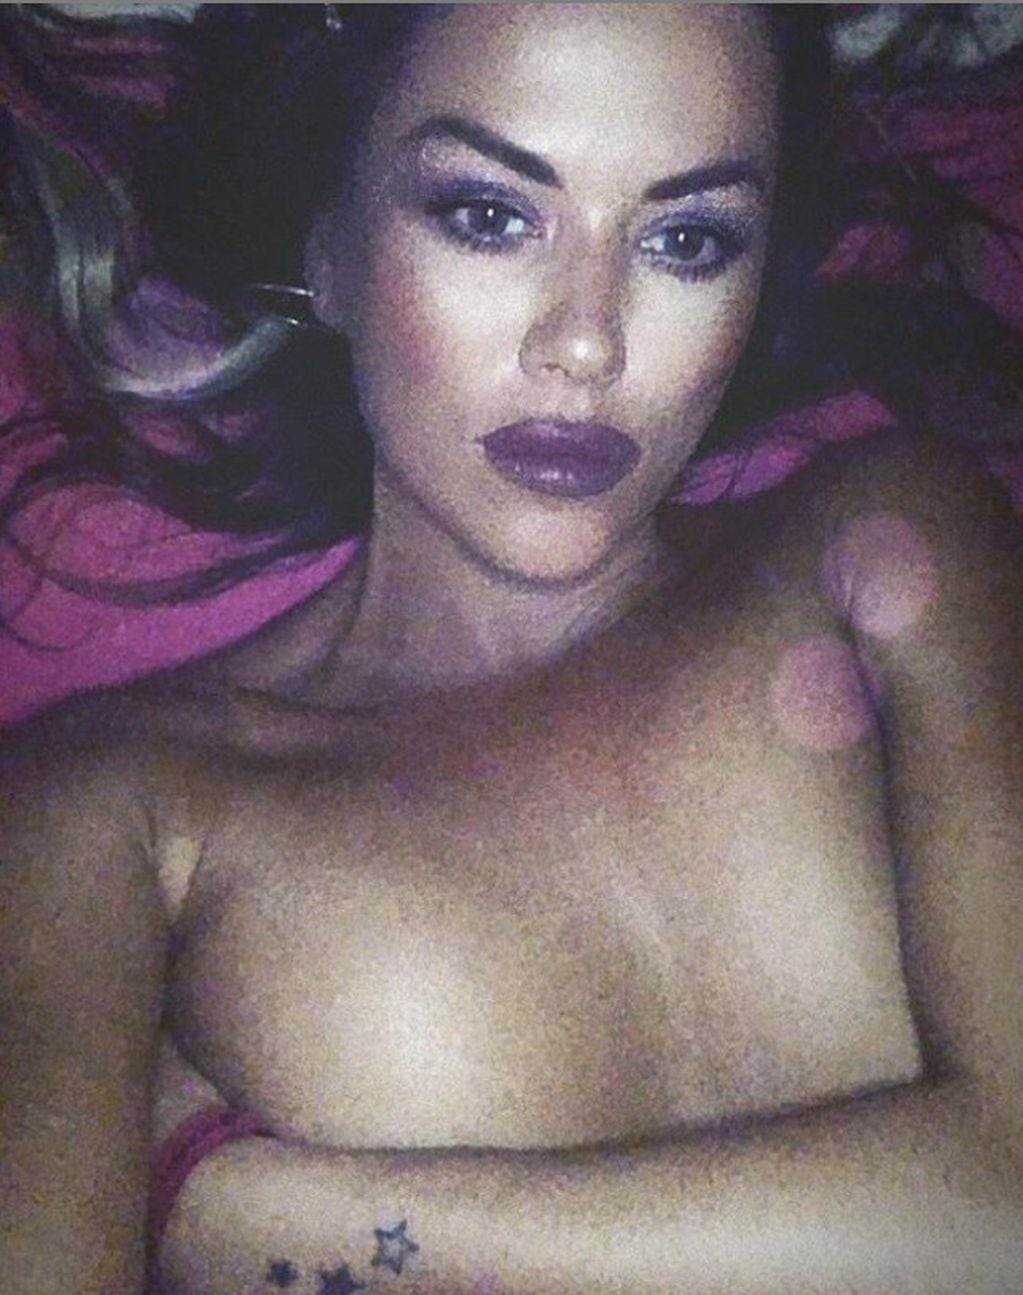 Karina Jelinek desafió la censura de Instagram con un topless desde la cama (Instagram: @karijelinek).